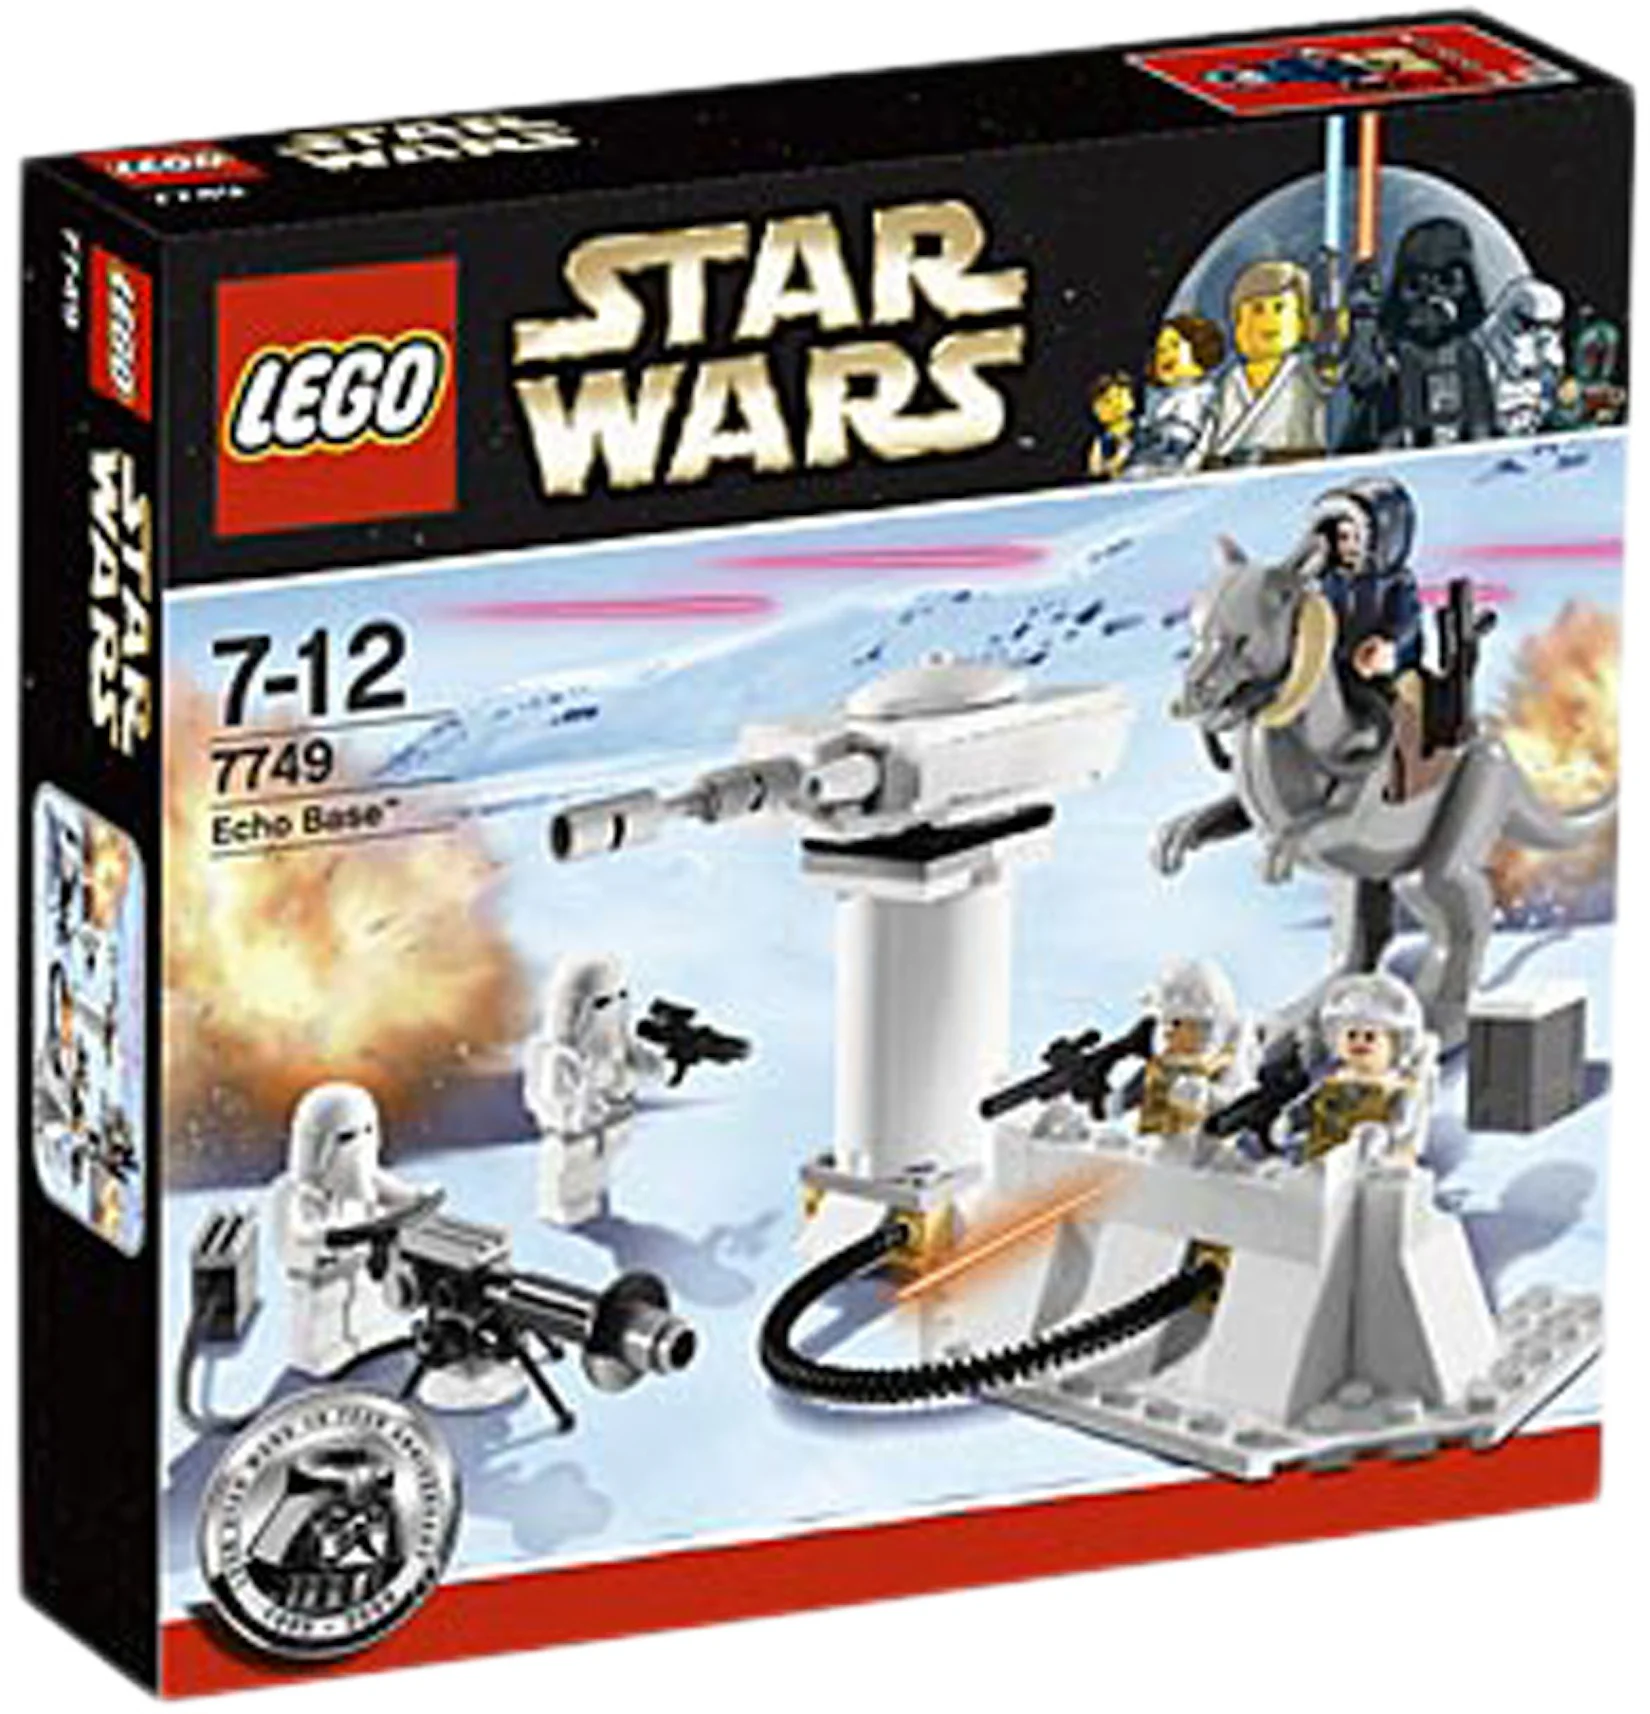 LEGO Star Wars Echo Base Set 7749 - US